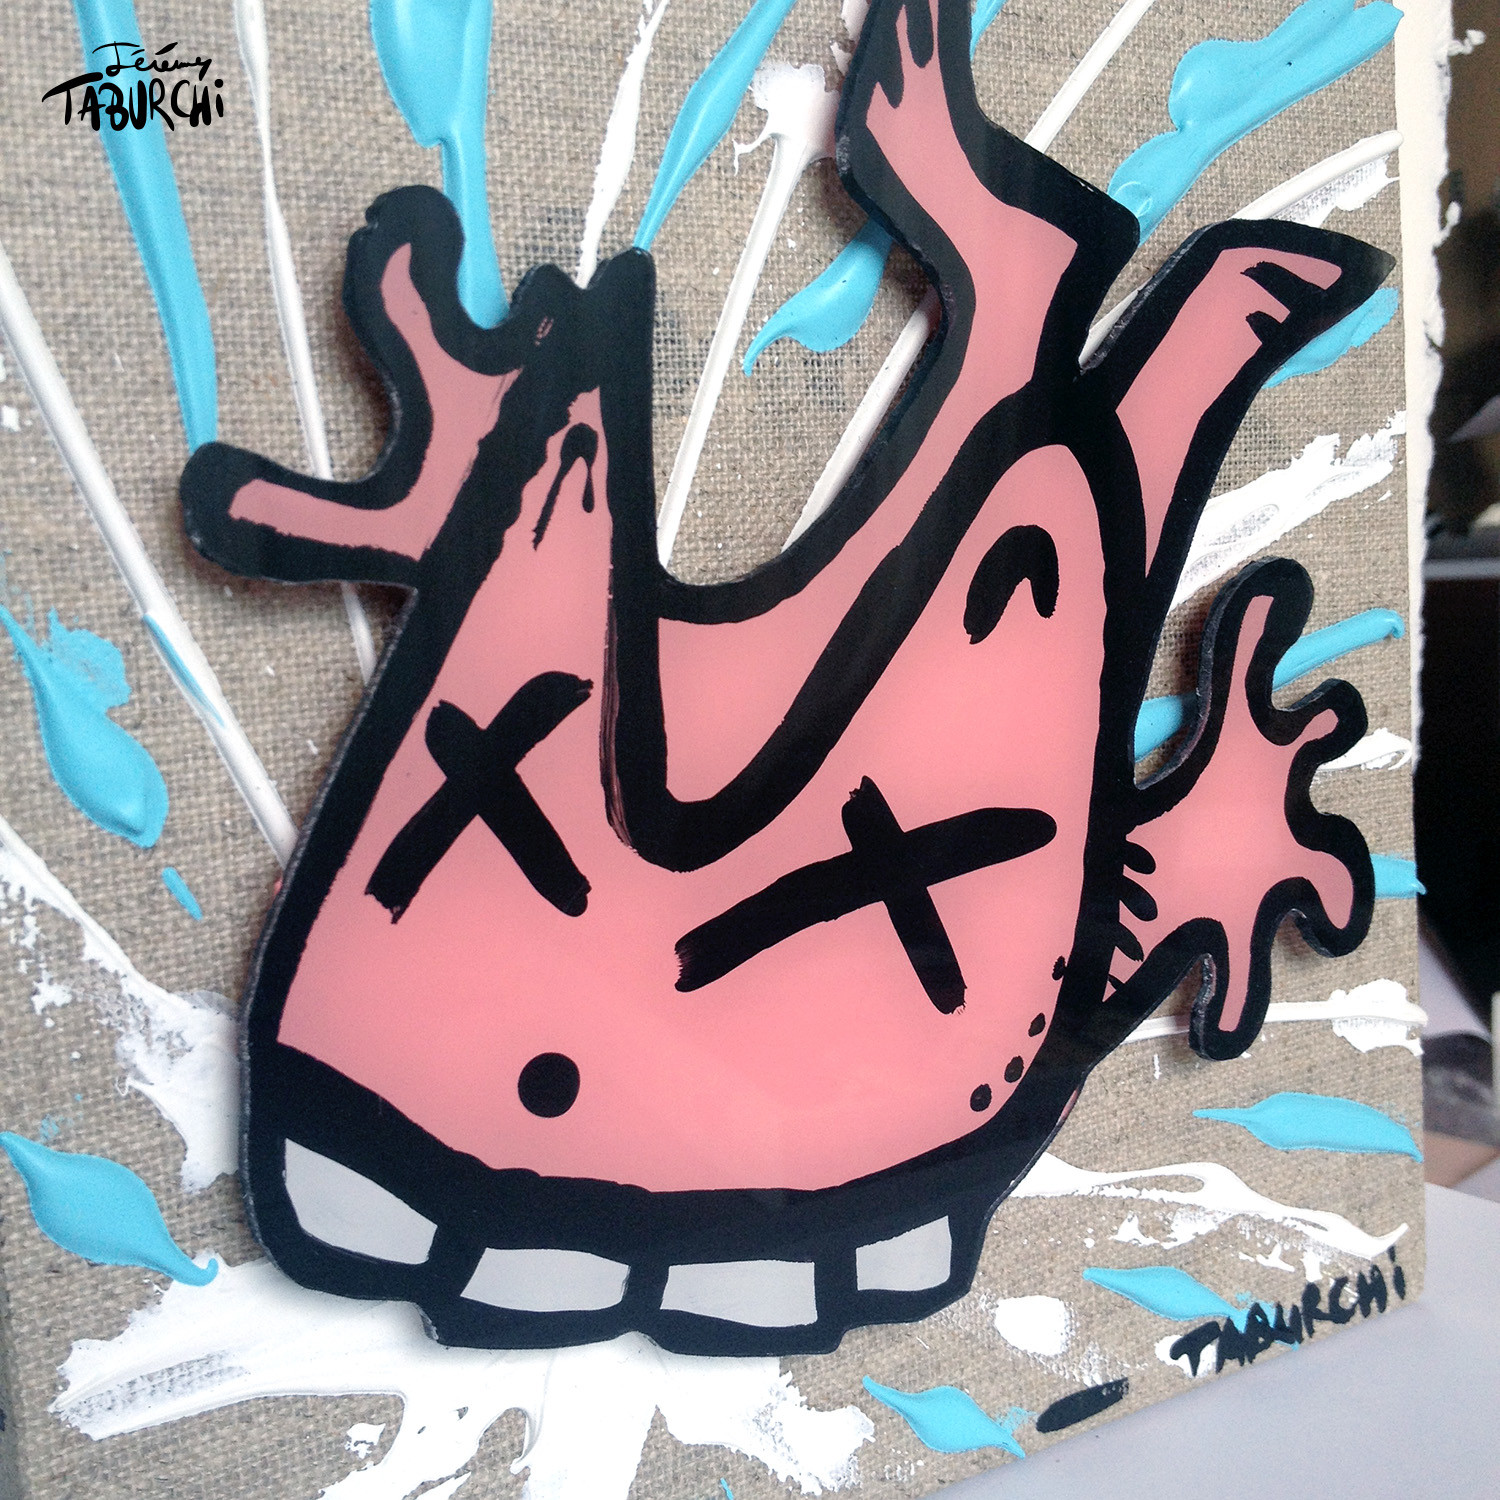 The Pink Cat breaks teeth, an acrylic on canvas of Taburchi.